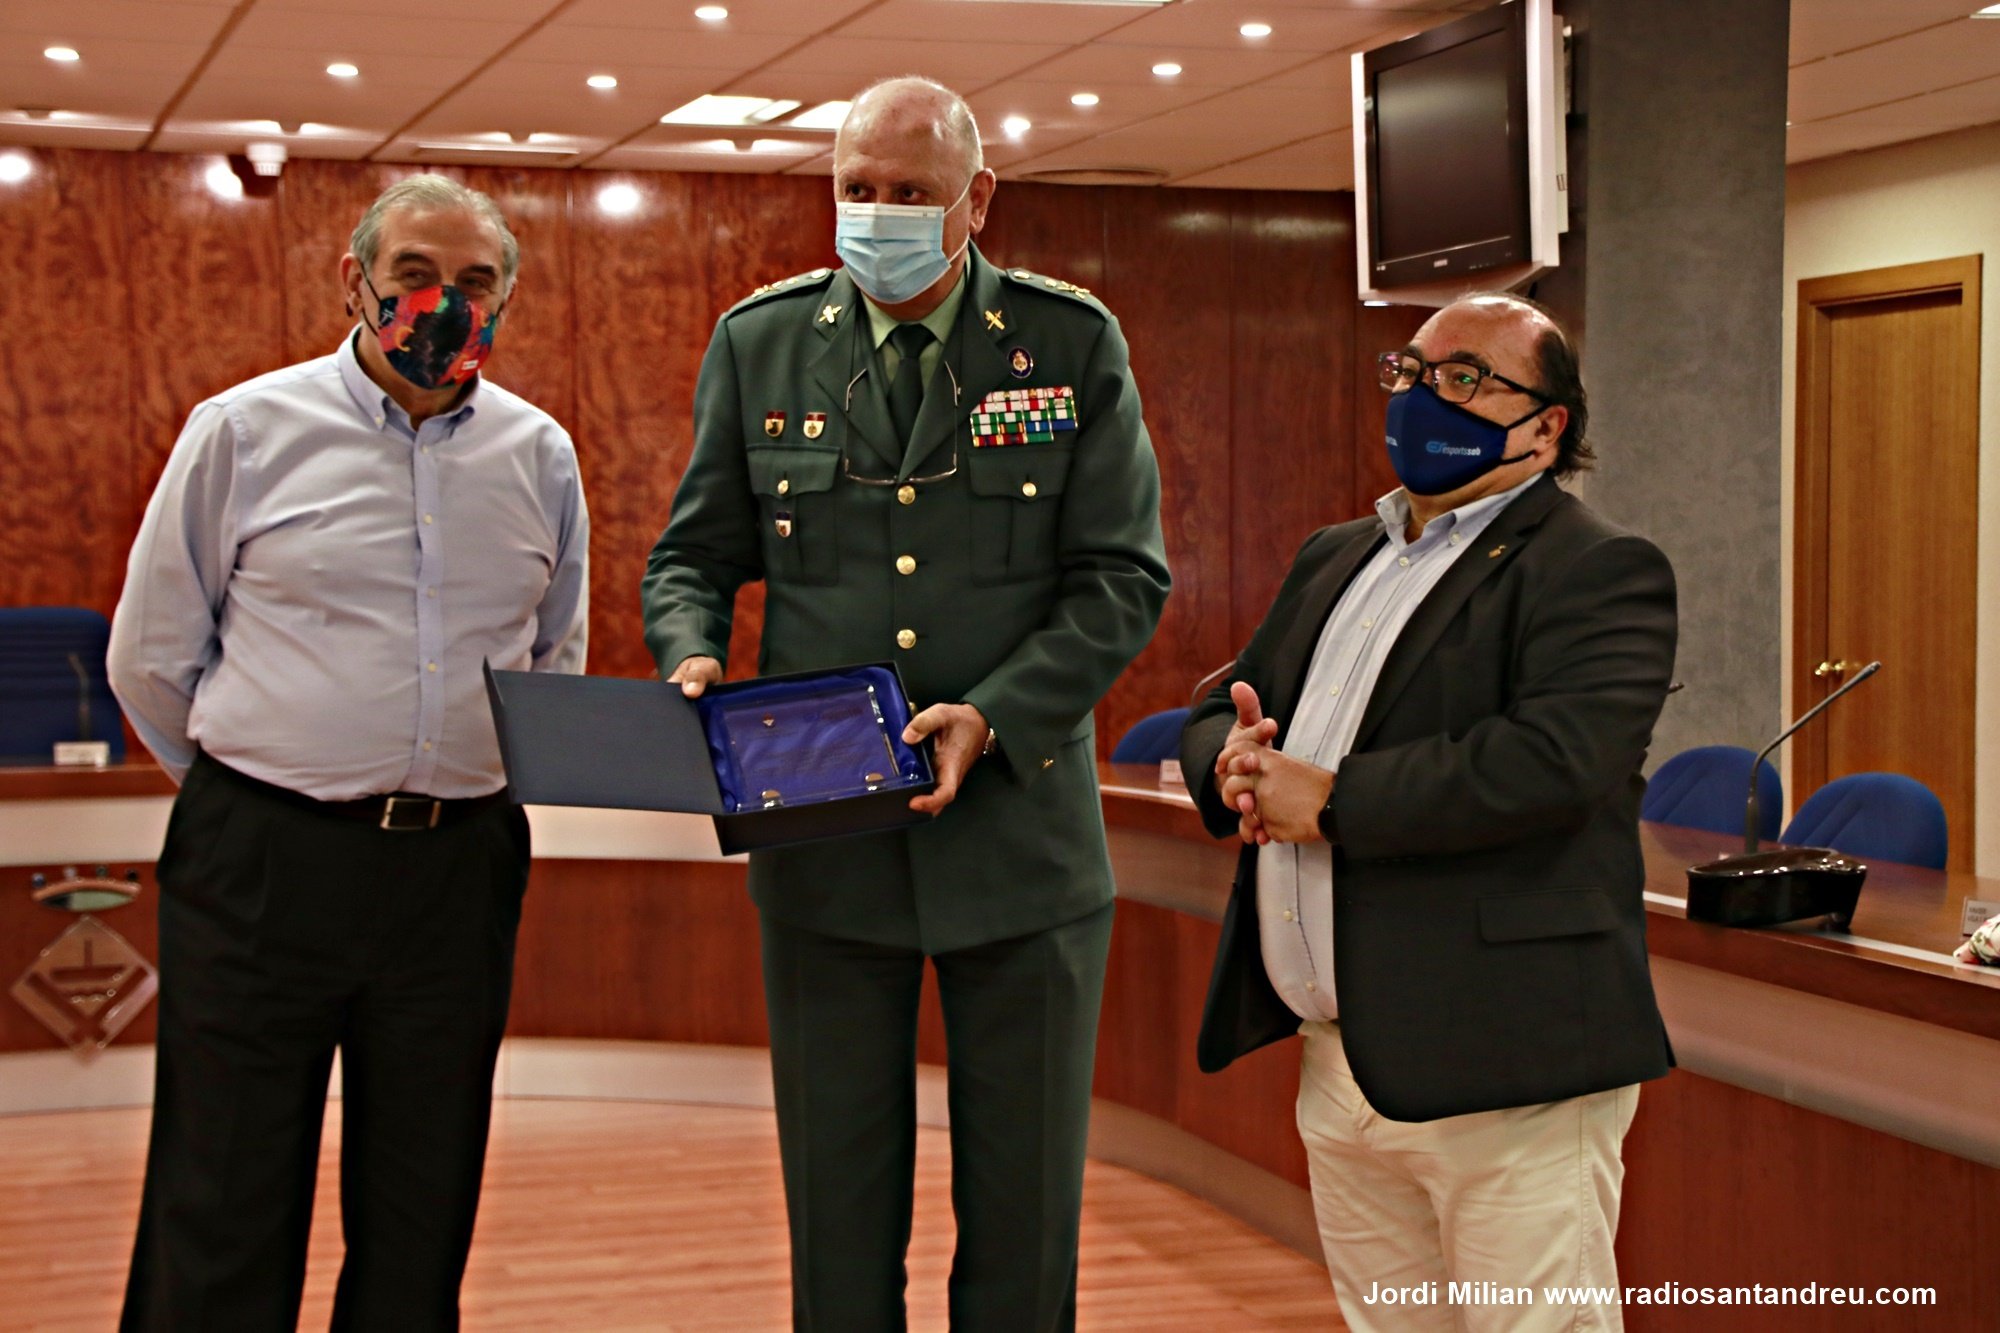 Condecoran al jefe de la Guardia Civil que vinculó independentismo y "horror"